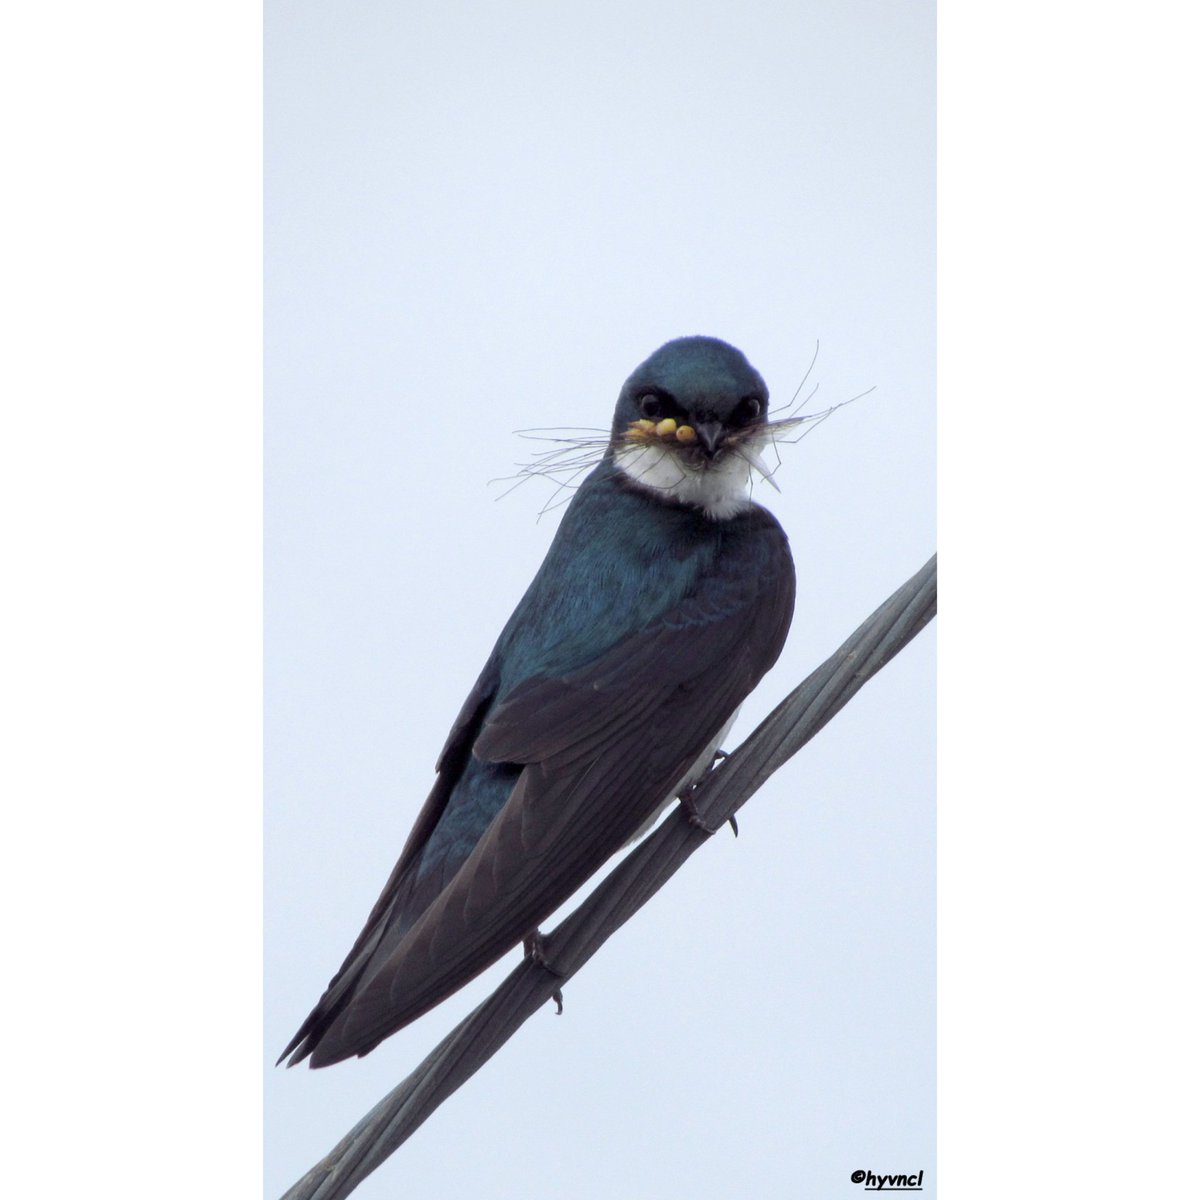 macaulaylibrary.org/asset/58382711
#treeswallow #tachycinetabicolor #cornellornithology #cornell
#16x9_birds #birdingphotography #7DM2 #400mmL #birdsoftwitter #twitcher #birdyourworld #500pxrtg #ThePhotoHour #dailyphoto #PintoFotografía #thePhotoNow #yourshot #PhotoOfTheDay #trakus